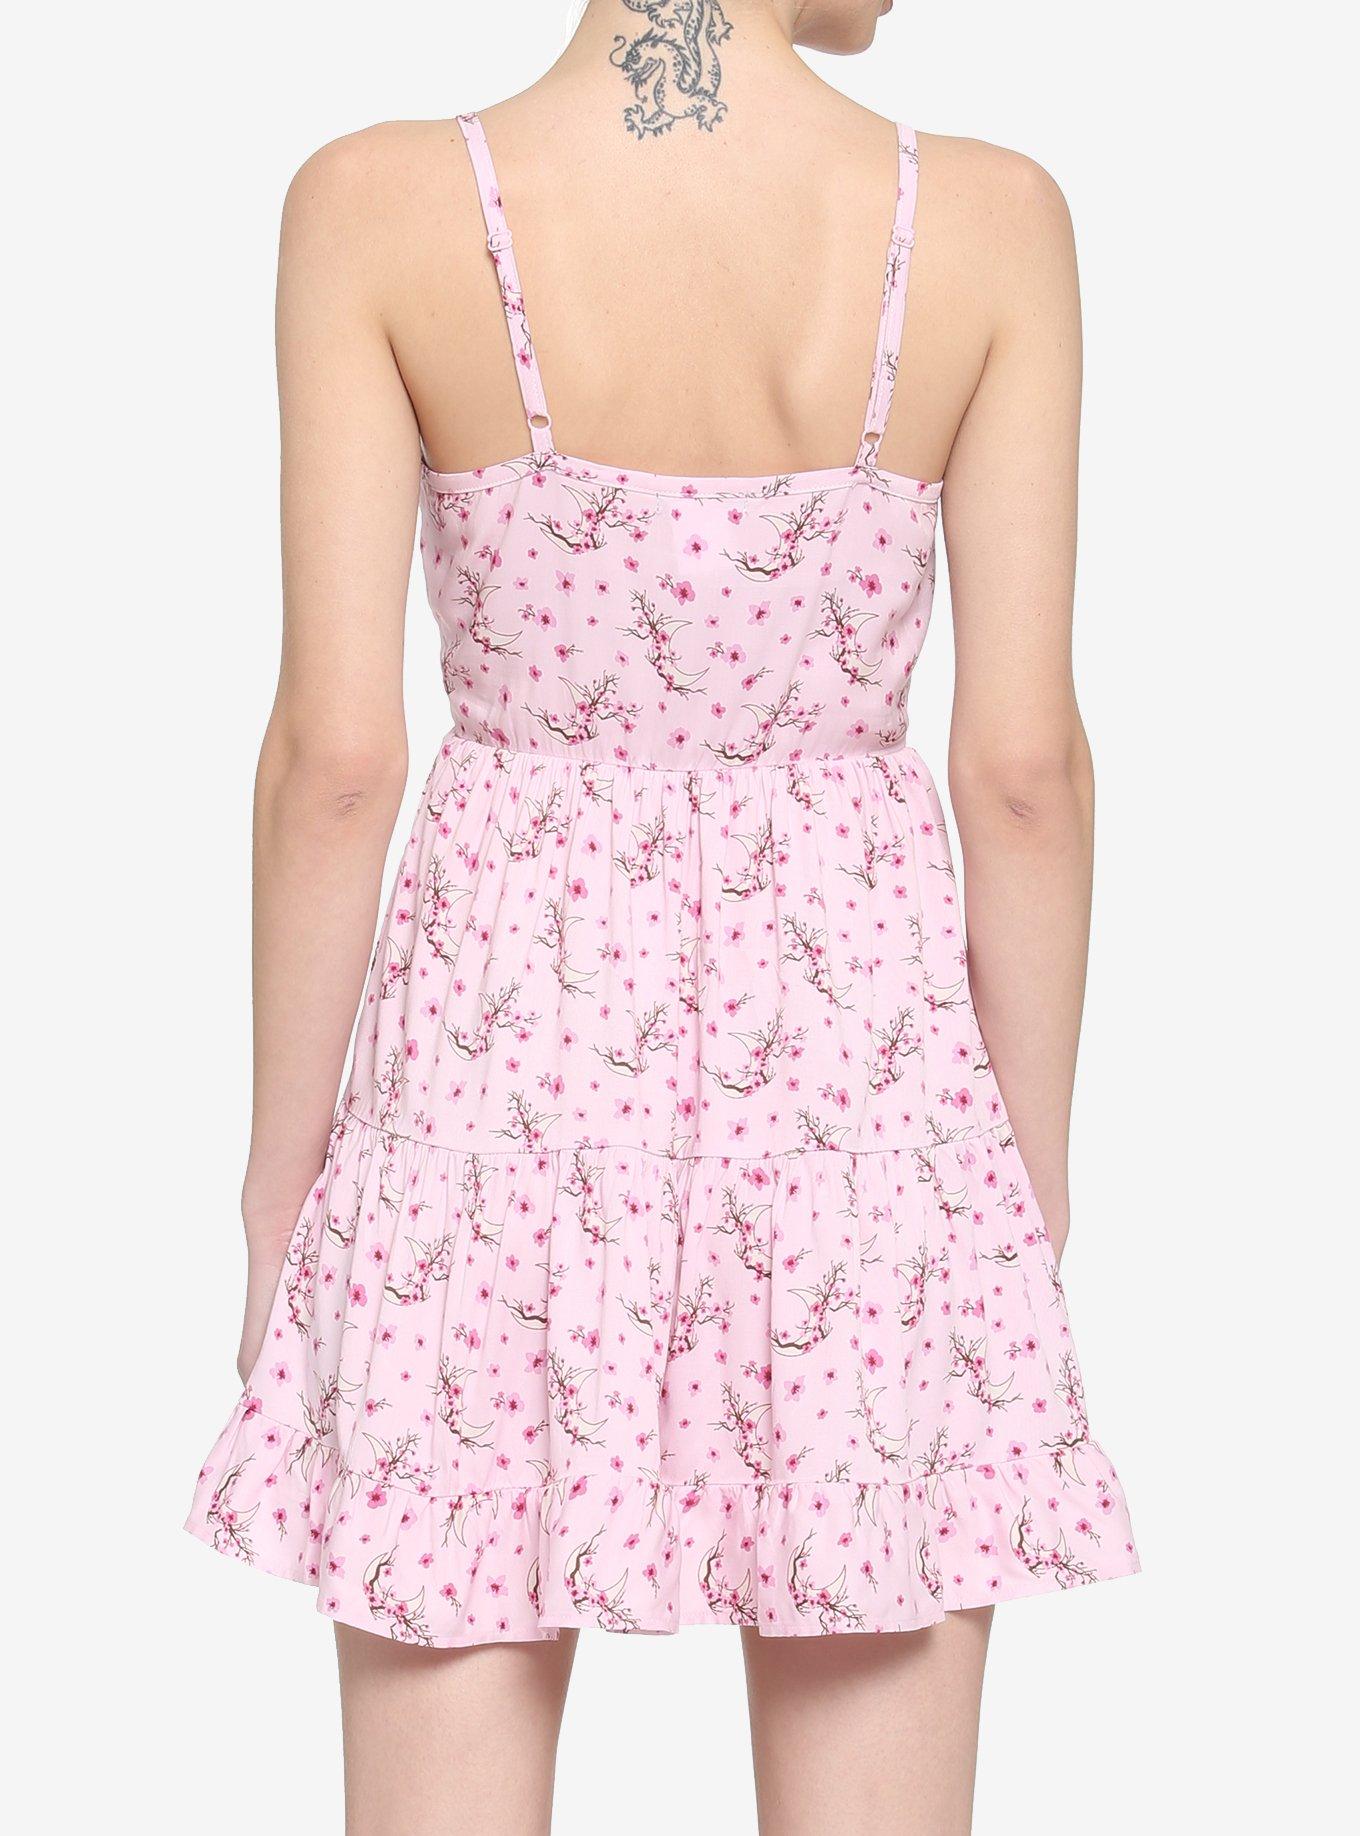 Sakura Moon Tiered Dress, PINK, alternate